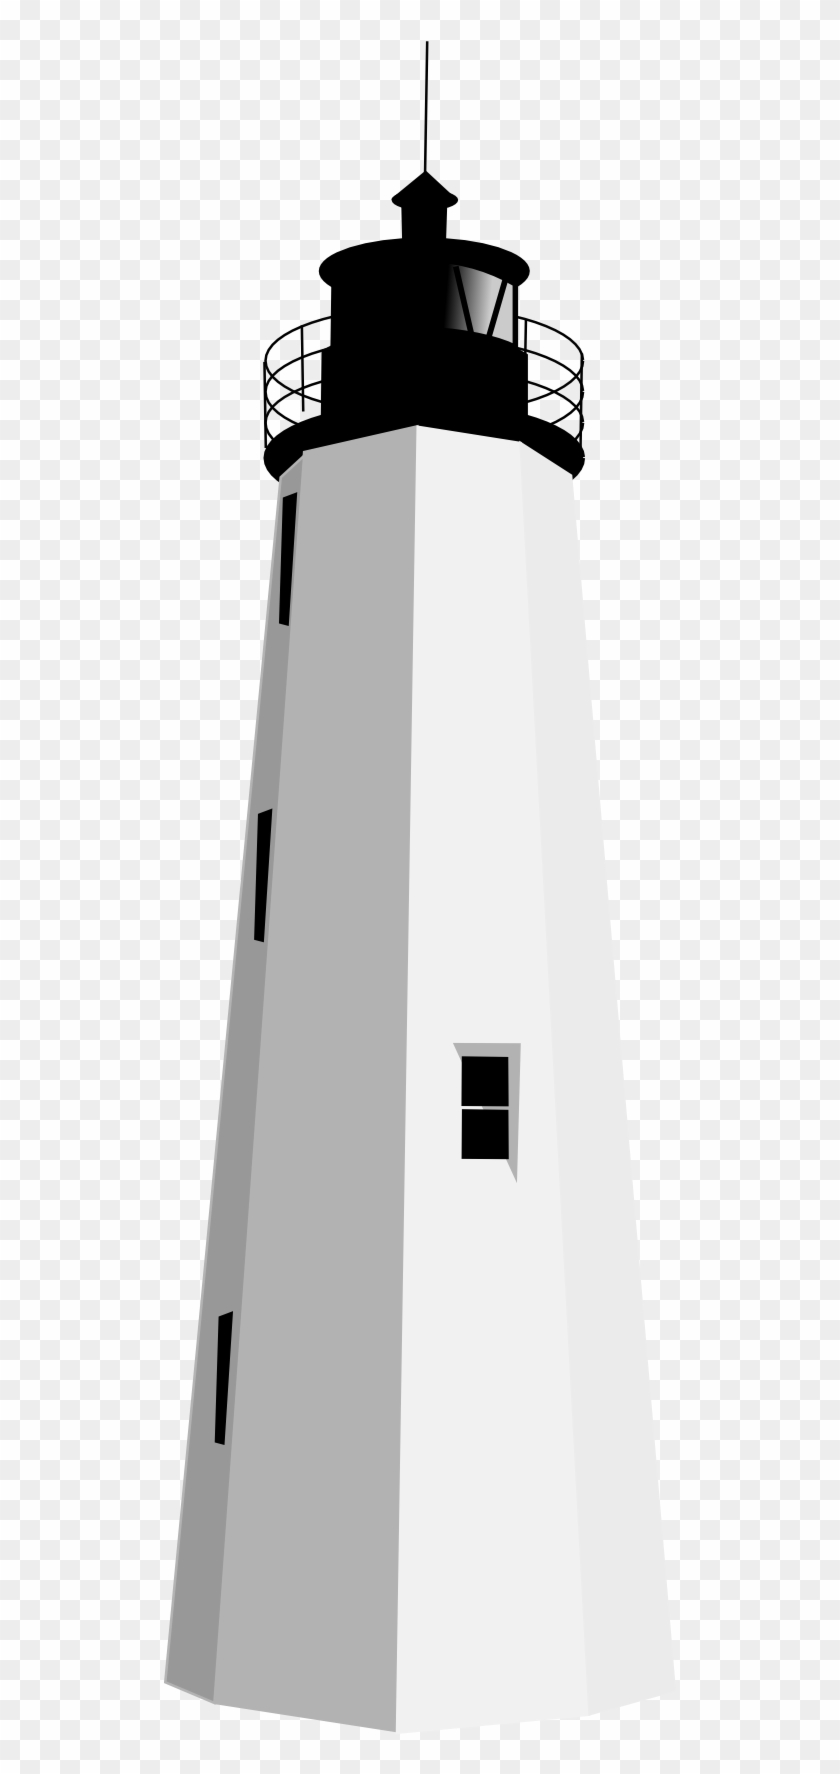 Lighthouse Silhouette Clip Art Ihg6ne Clipart - Clip Art #959901